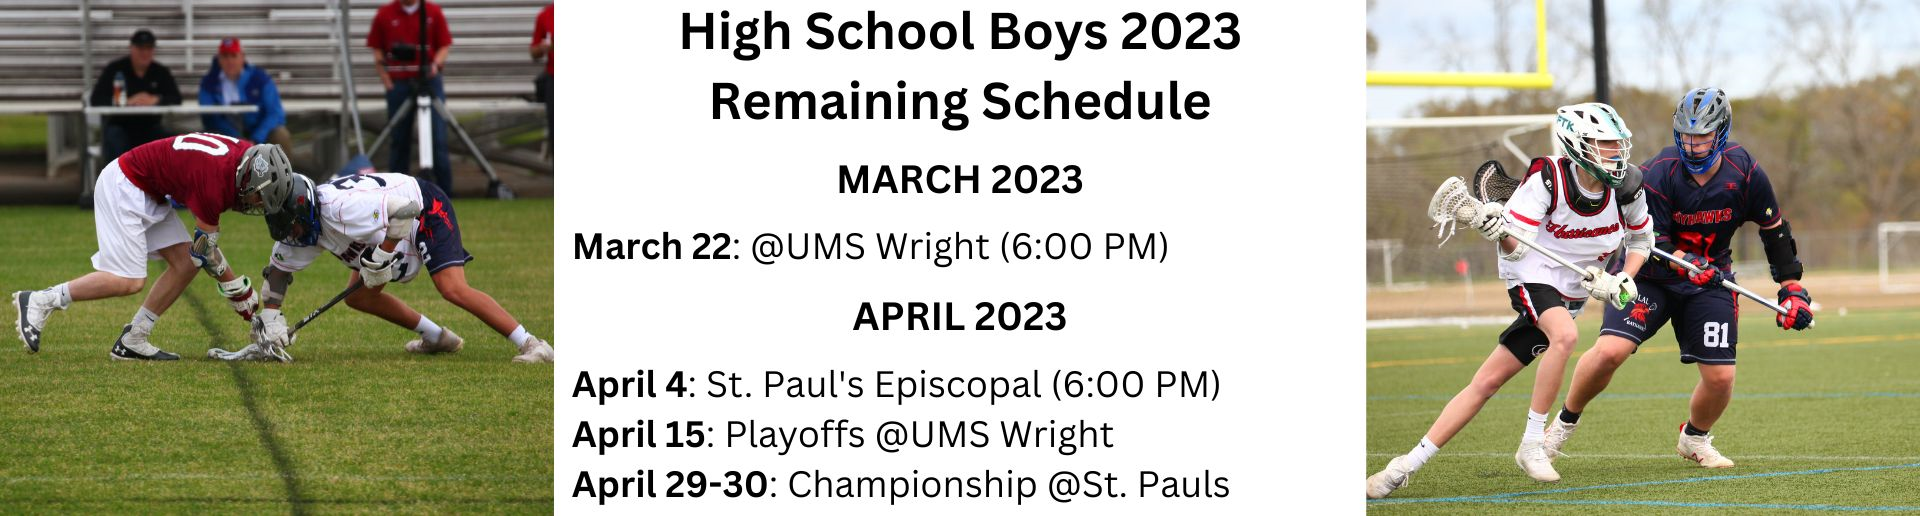 High School Boys 2023 Remaining Games